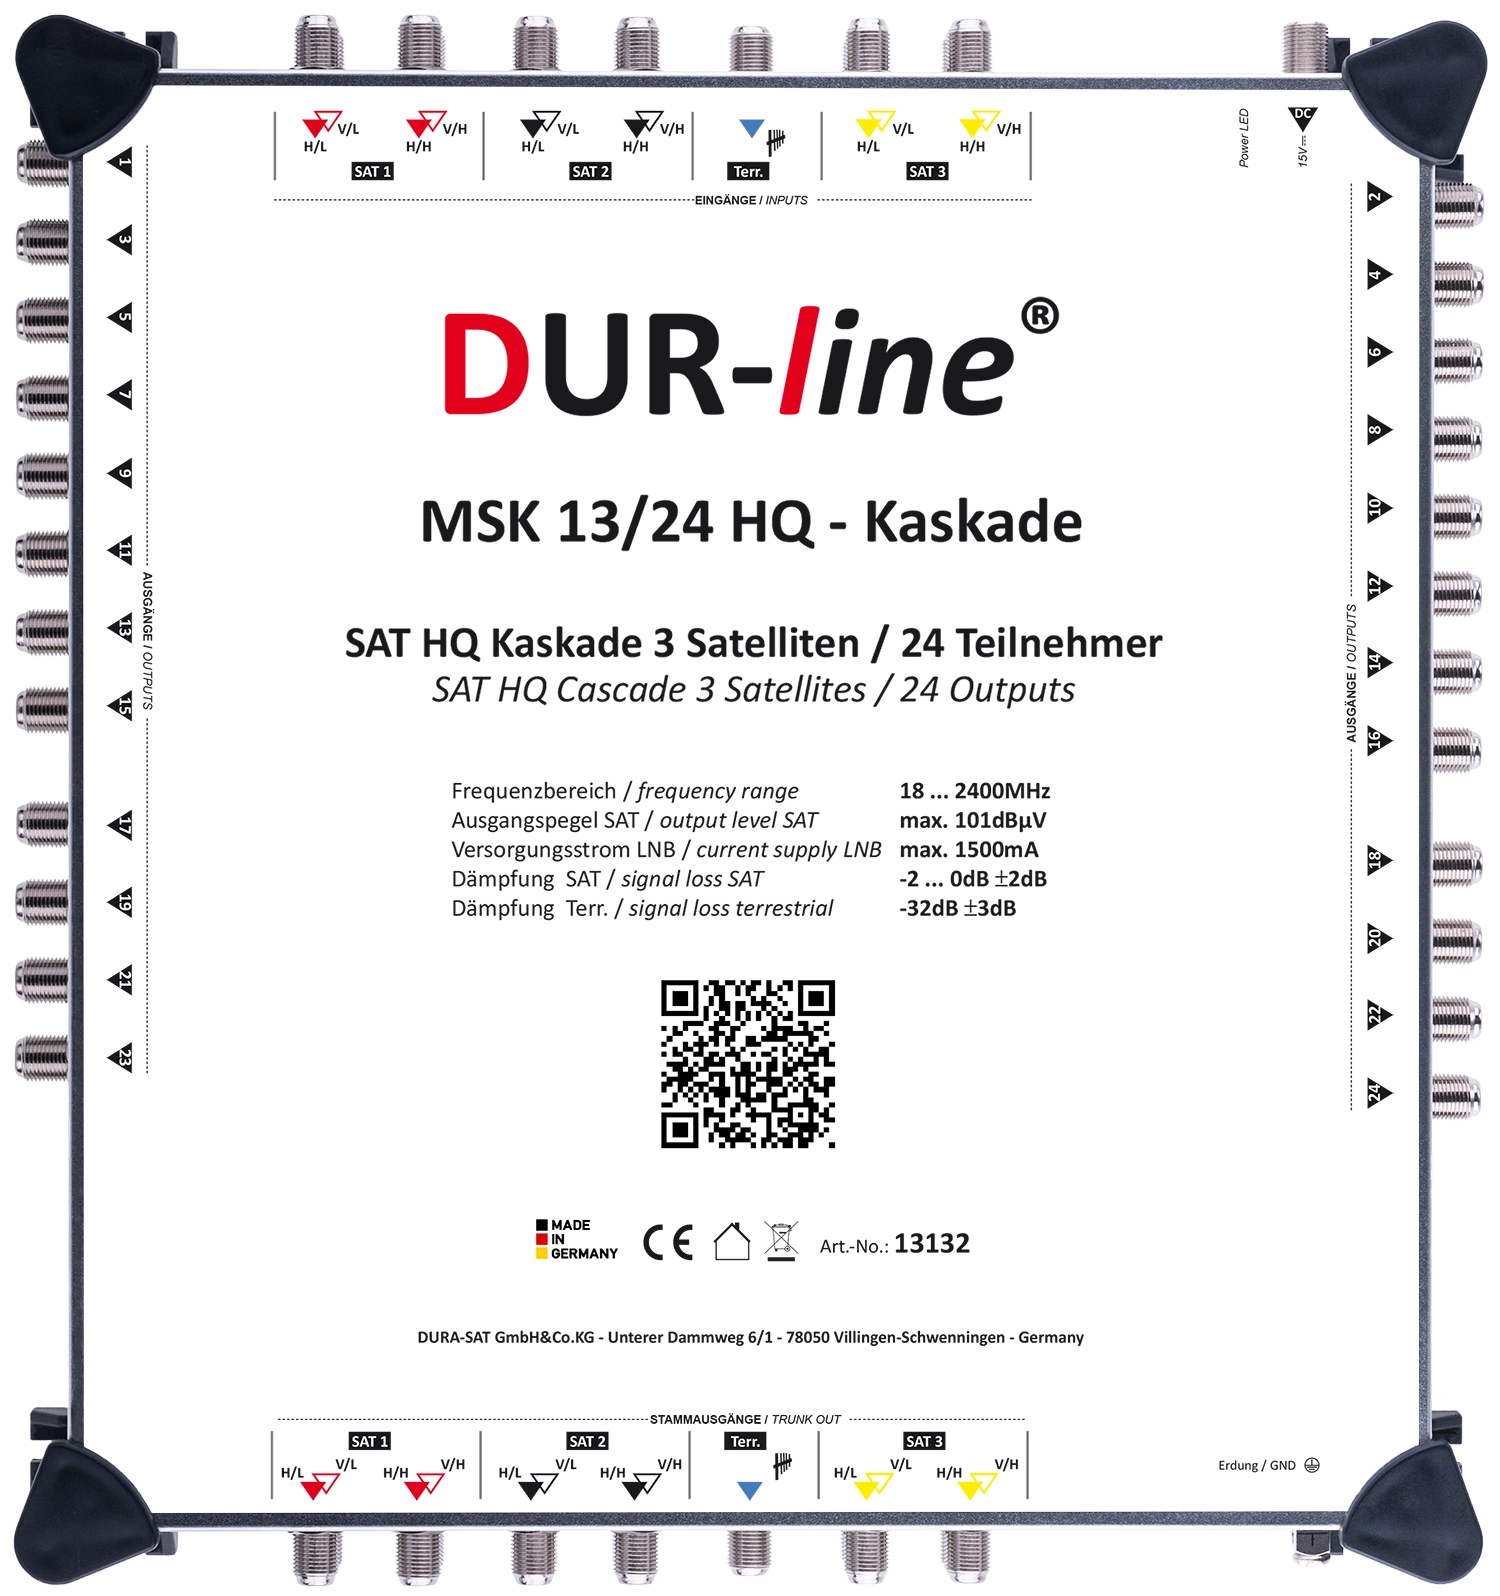 DUR-line MSK 13/24 HQ - Kaskade